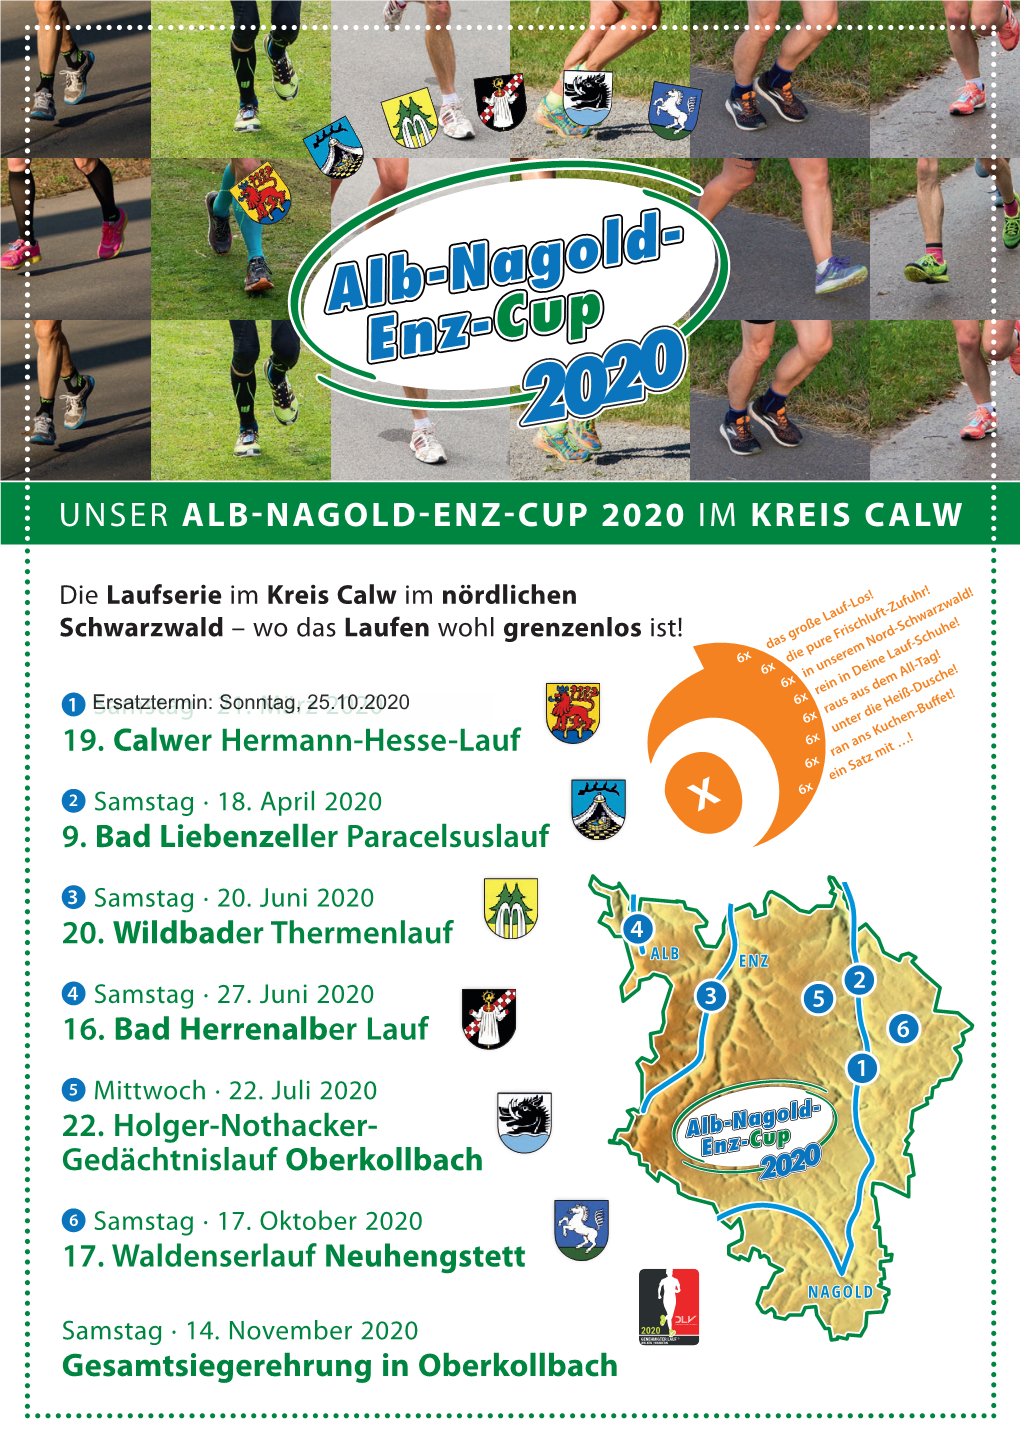 Alb-Nagold-Enz-Cup 2020 Im Kreis Calw